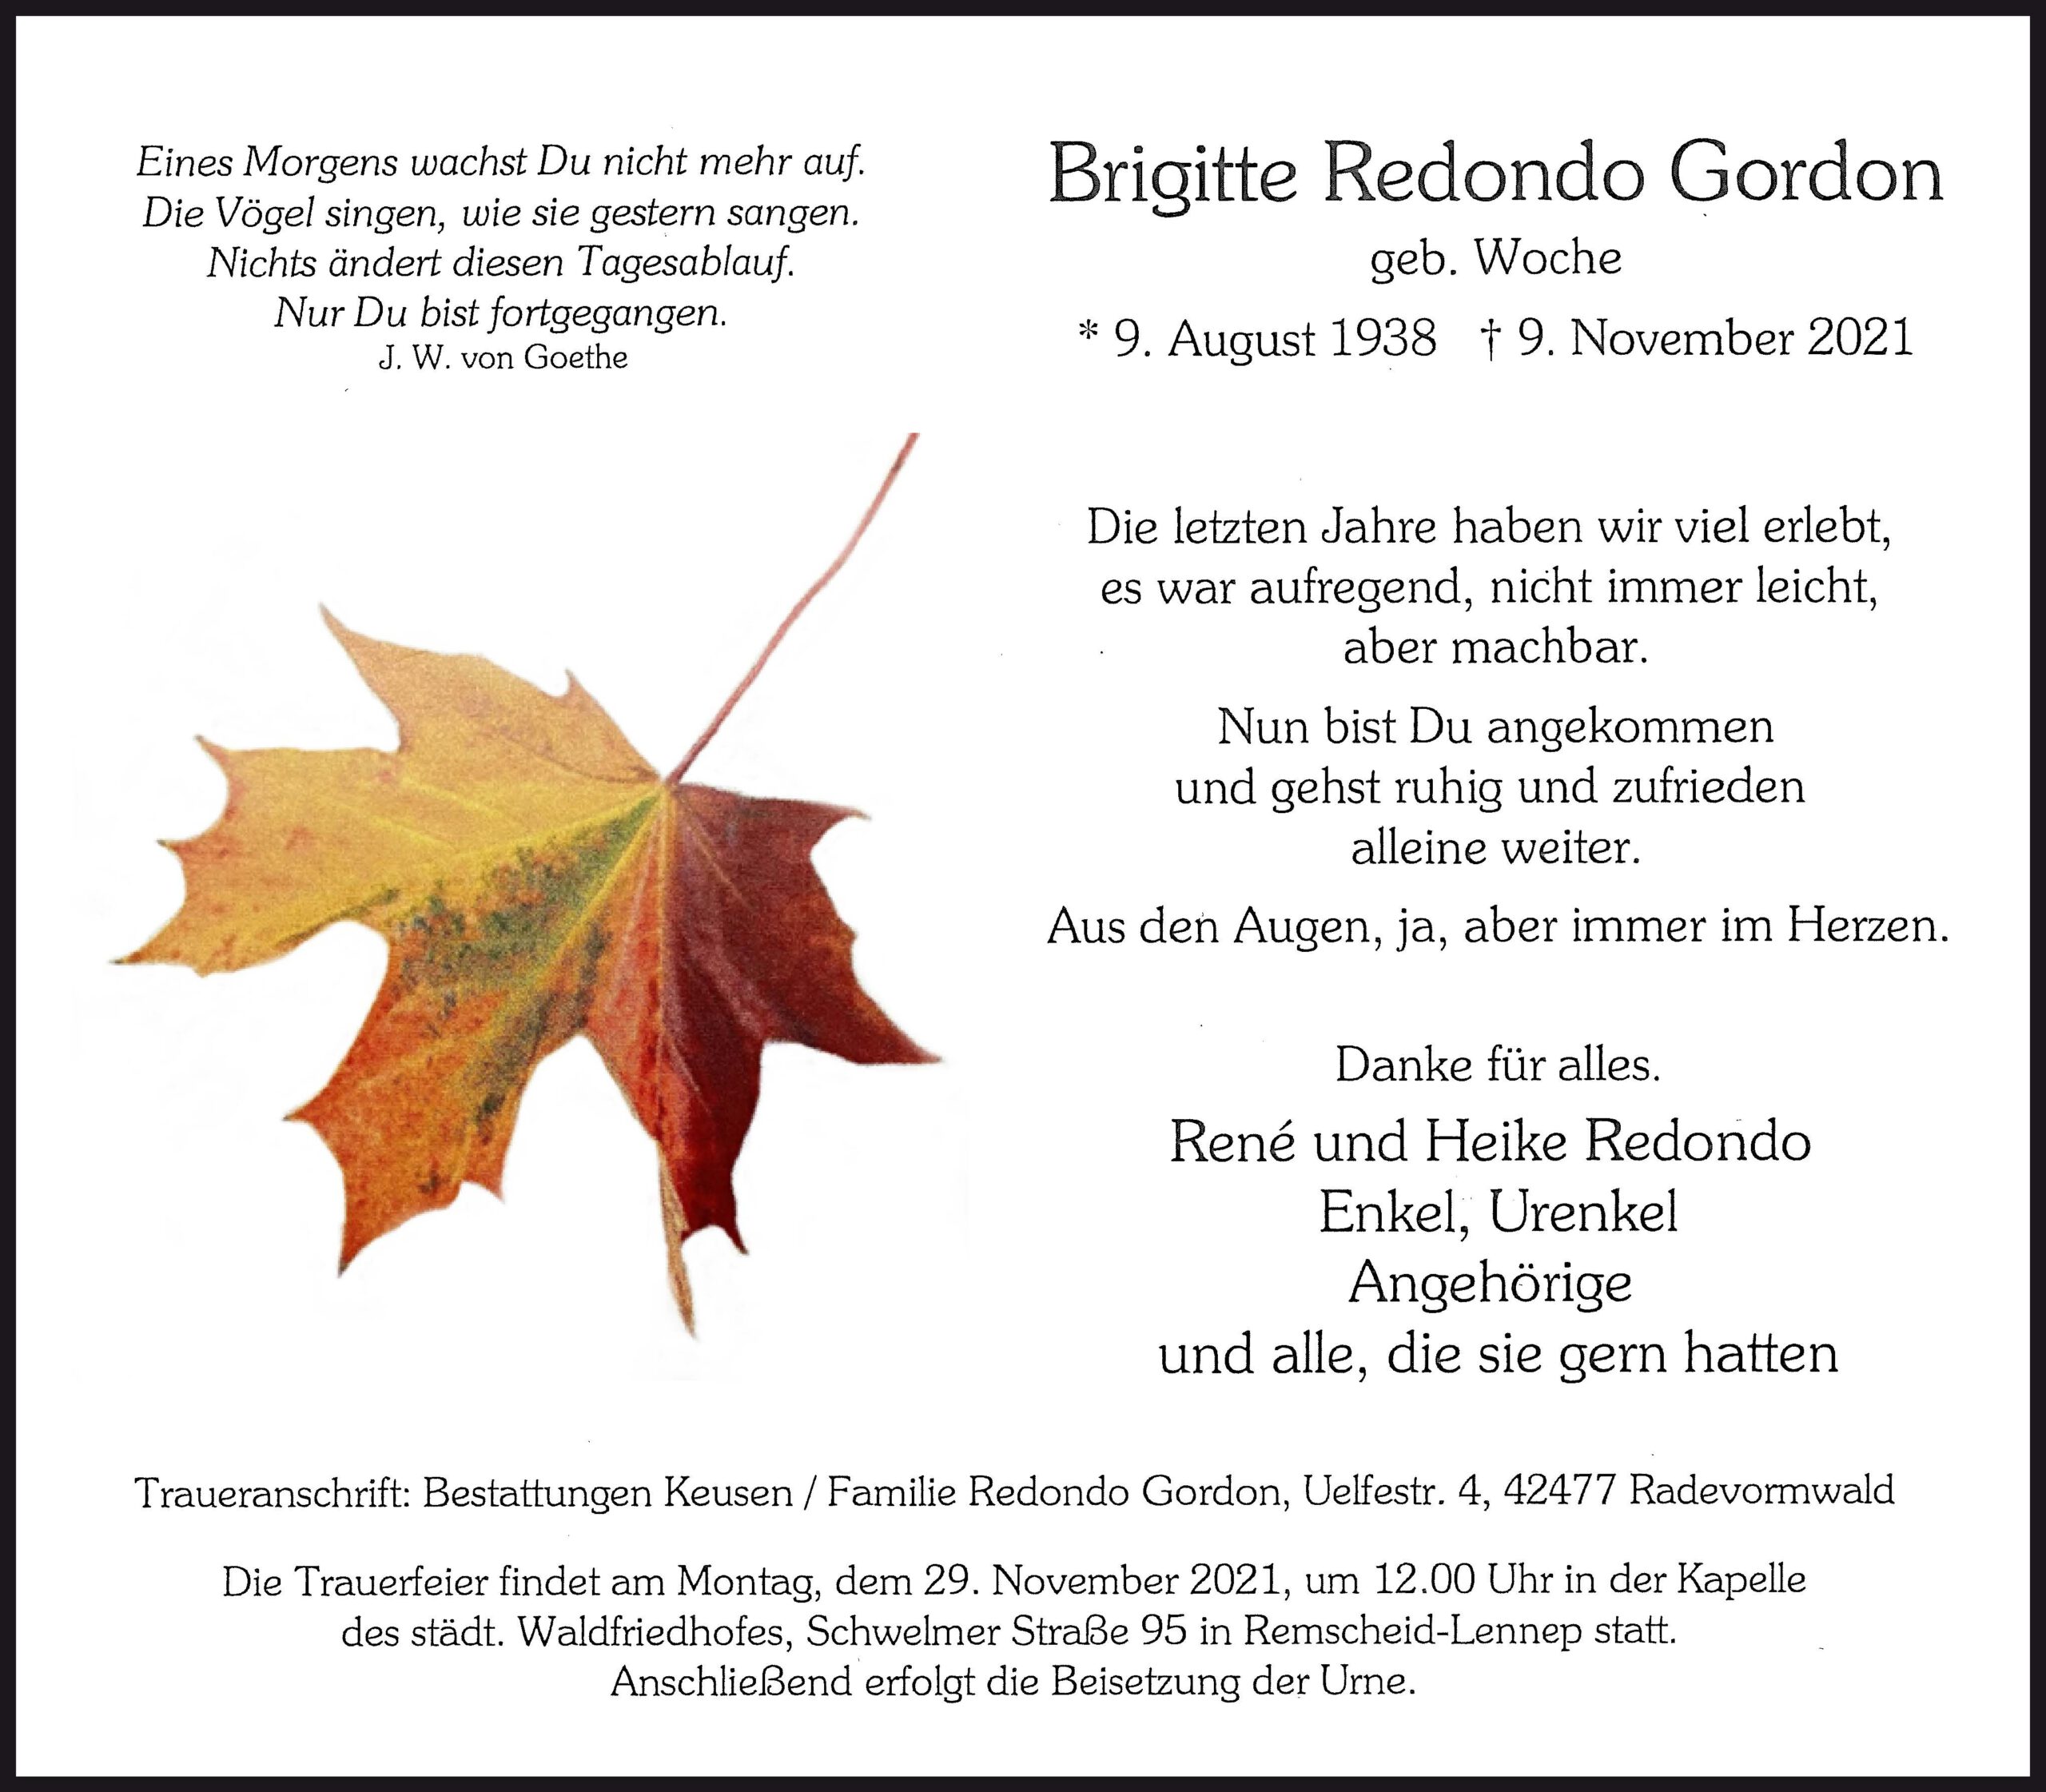 Brigitte Redondo Gordon